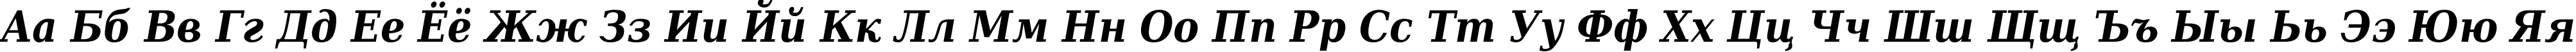 Пример написания русского алфавита шрифтом DejaVu Serif Condensed Bold Italic